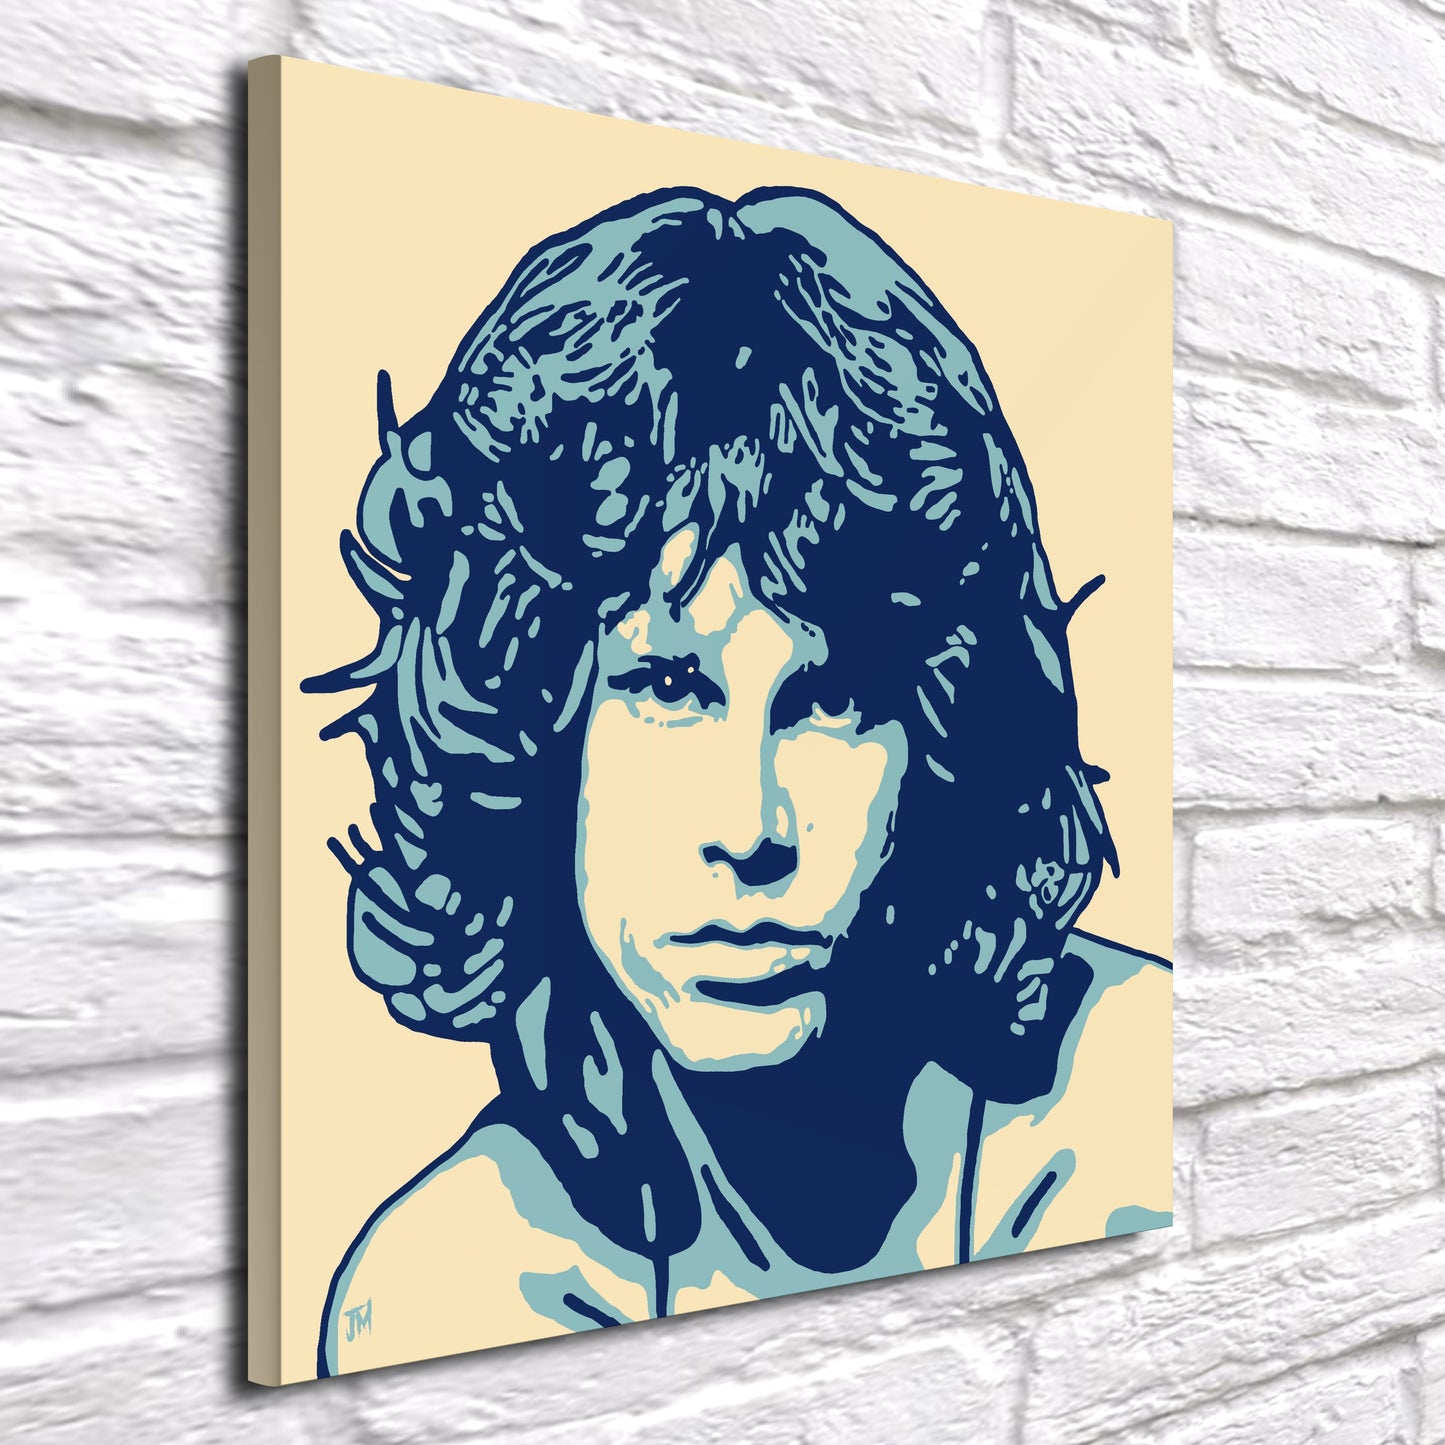 Jim Morrison retro popart